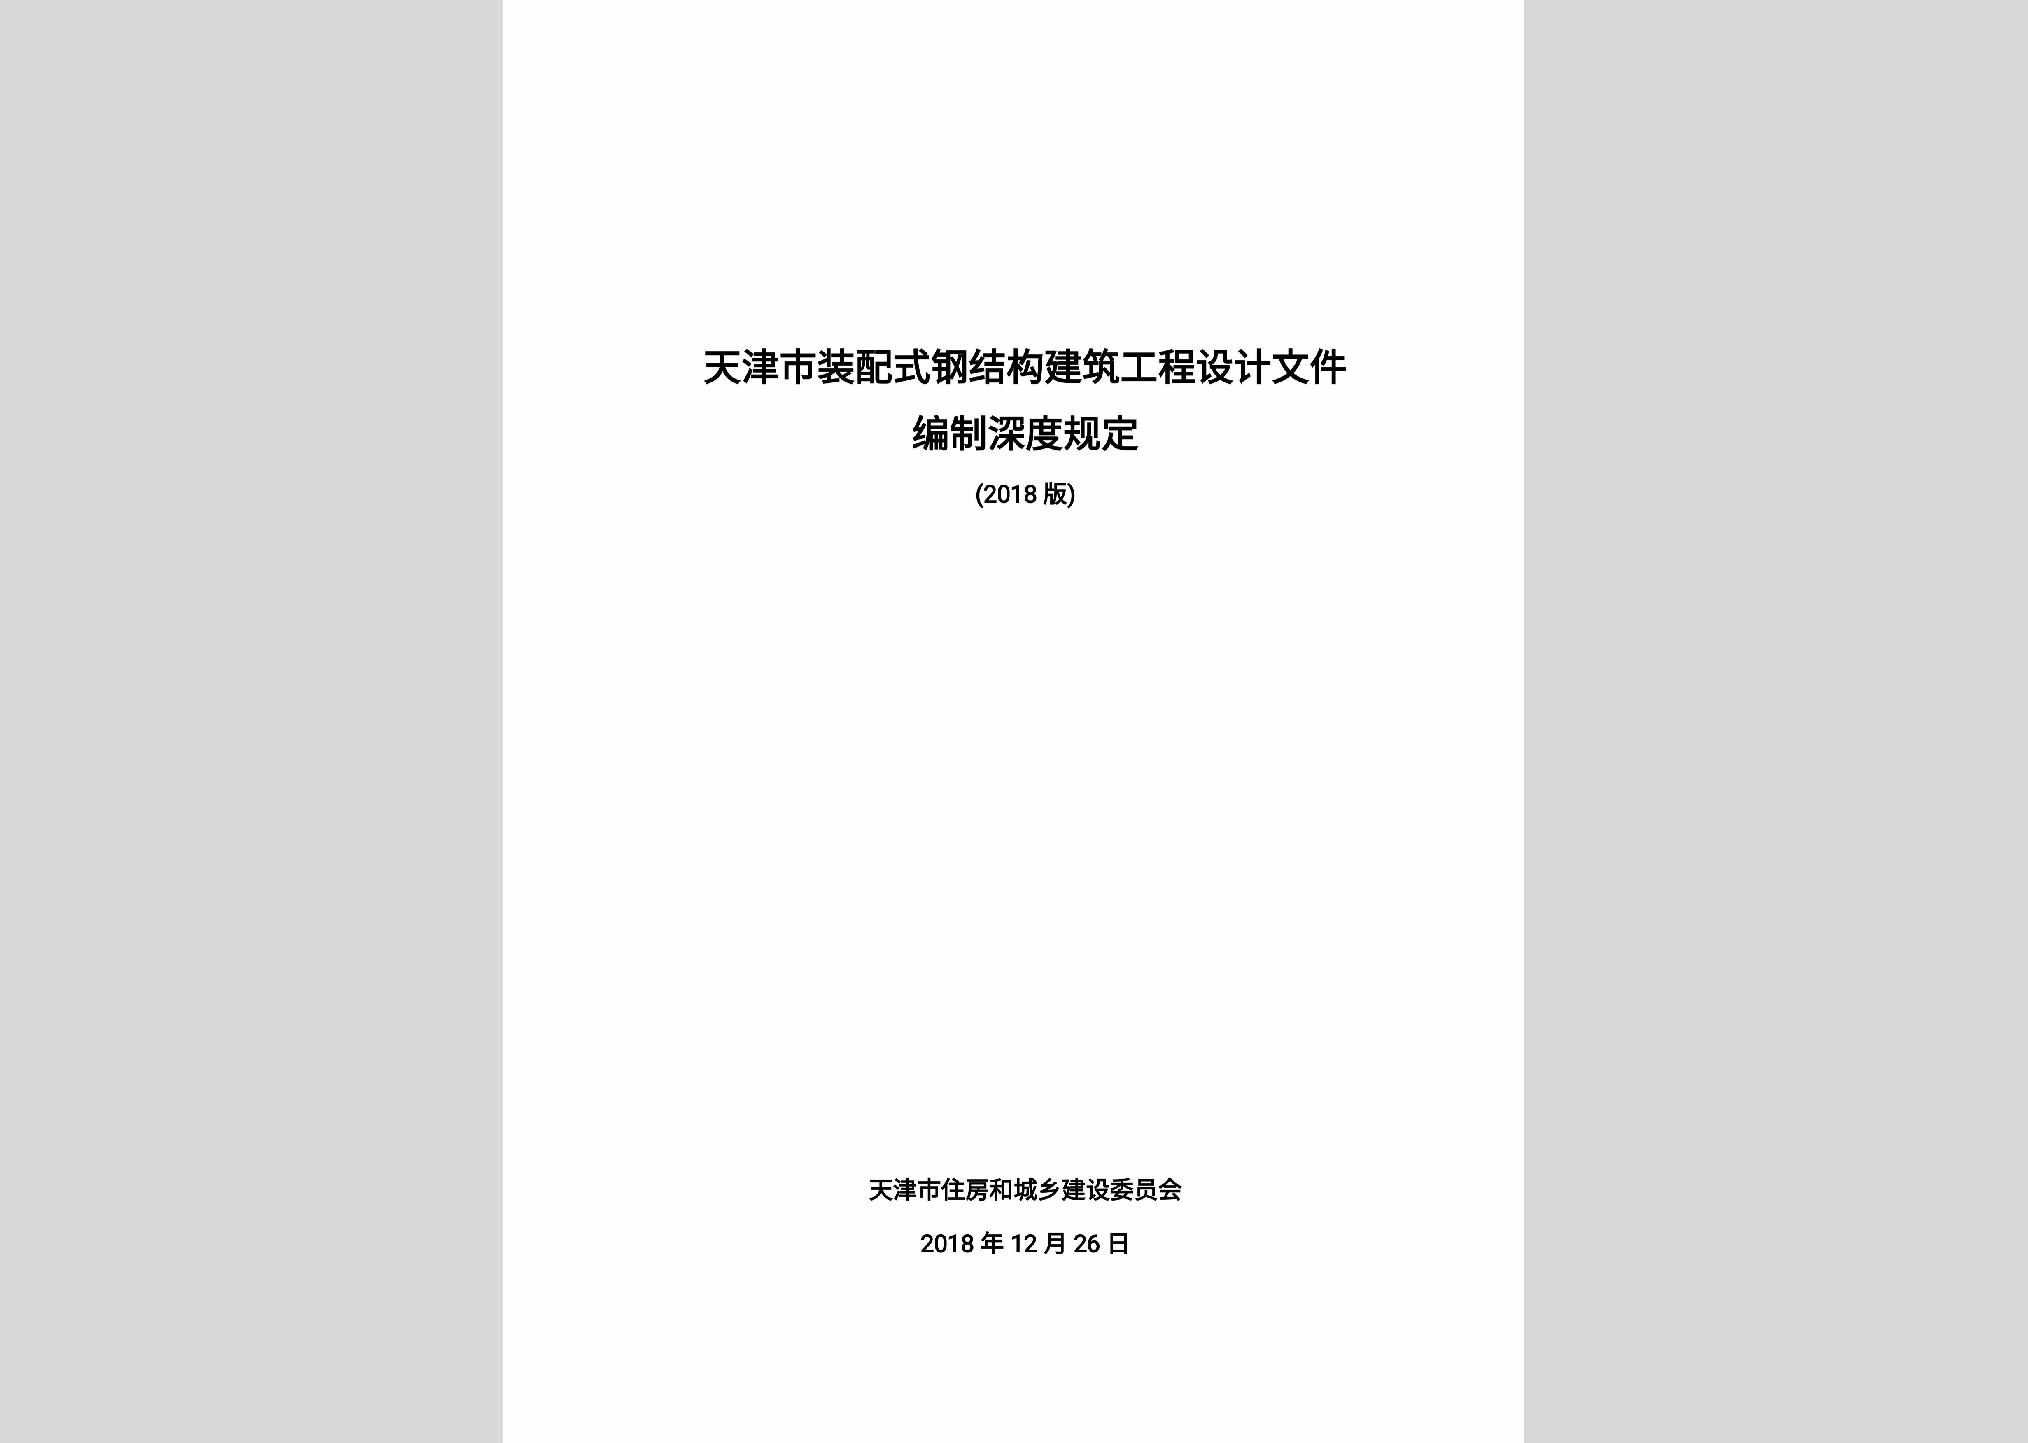 TJSZPSGJ：天津市装配式钢结构建筑工程设计文件编制深度规定（2018版）